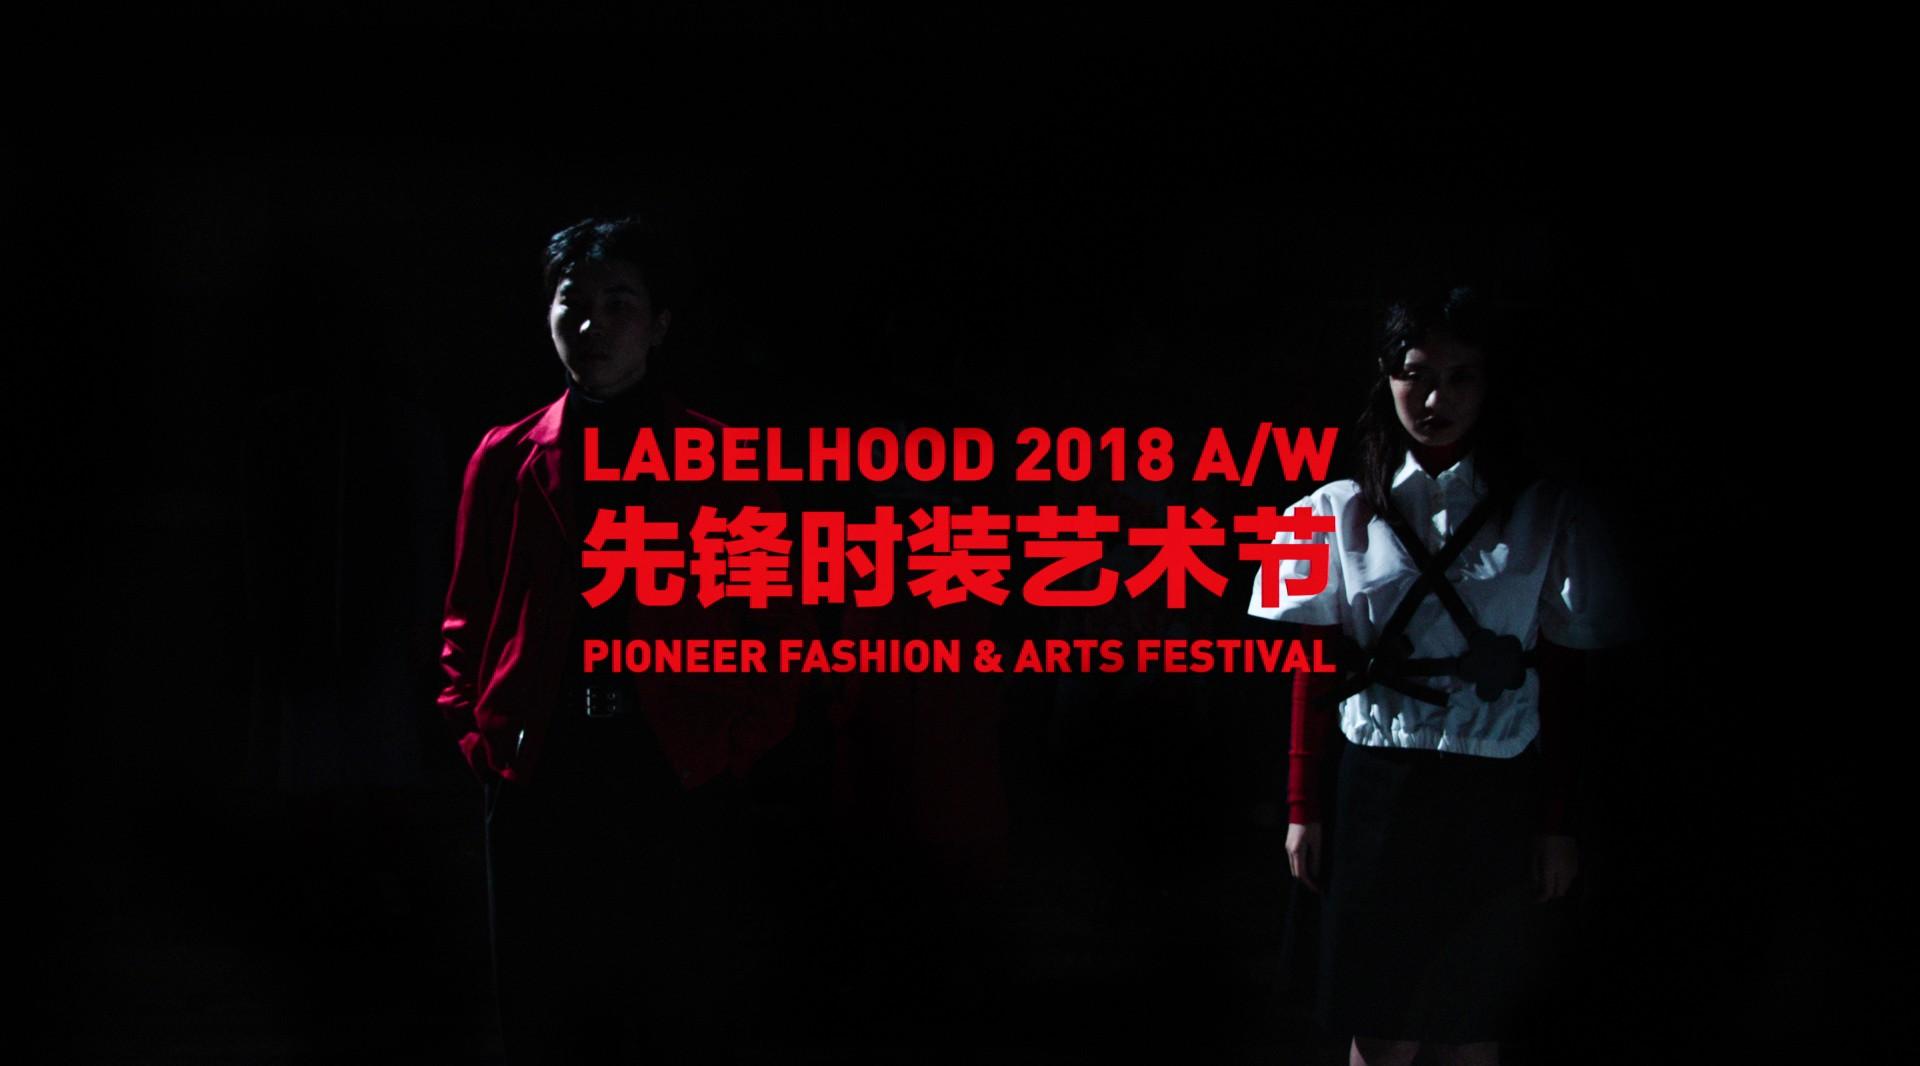 LABELHOOD 2018 A/W 上海时装周 FASHION FILM